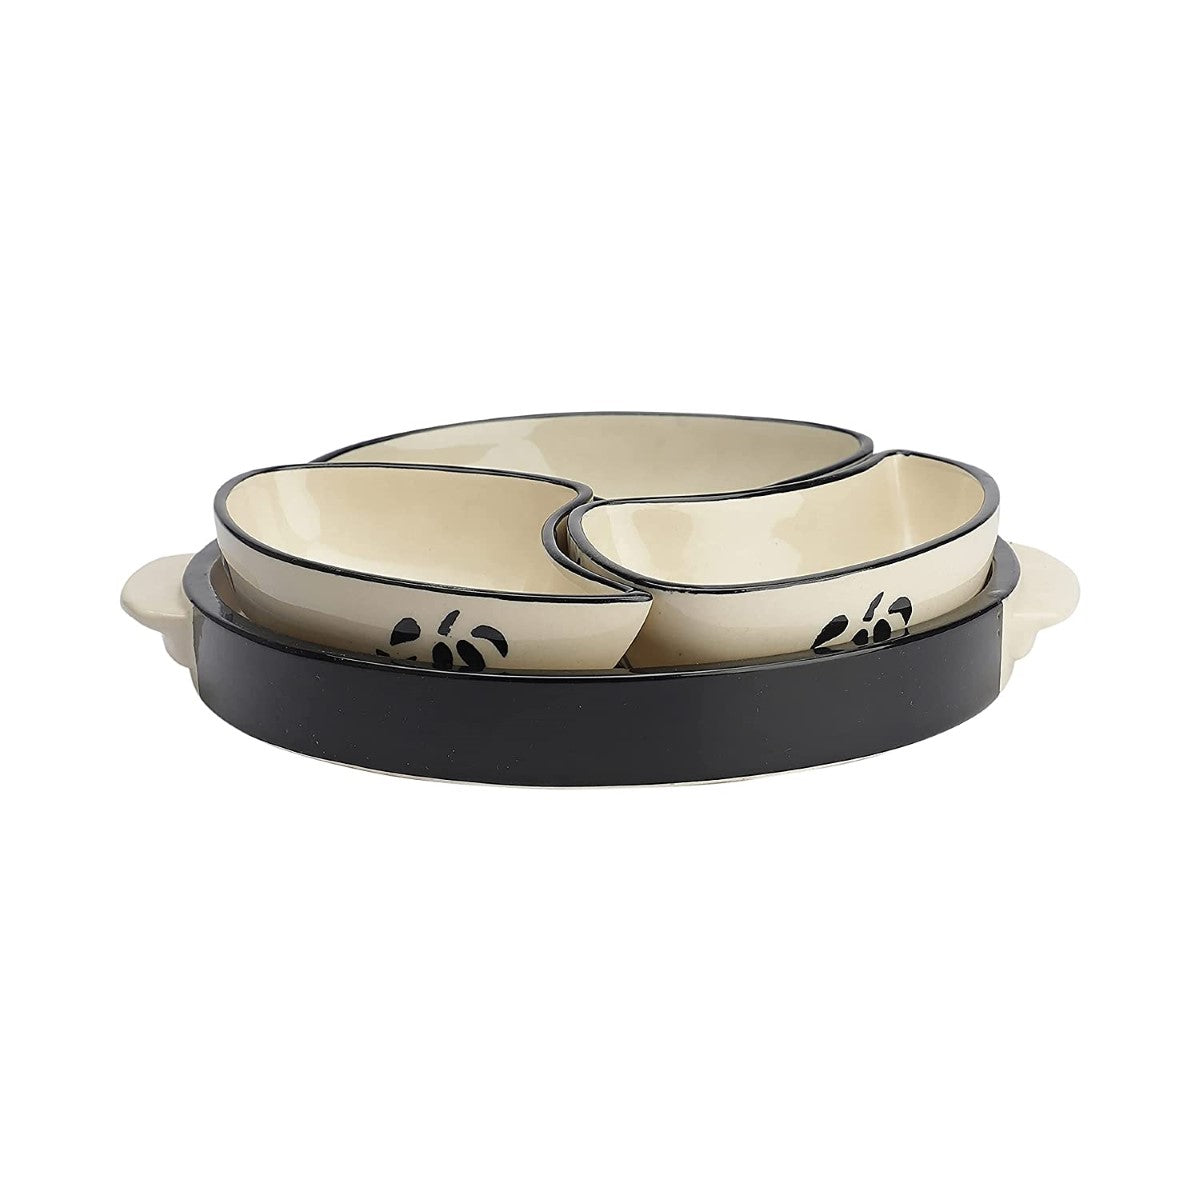 Handpainted Designer Ceramic Snacks Serving Bowls/Tray